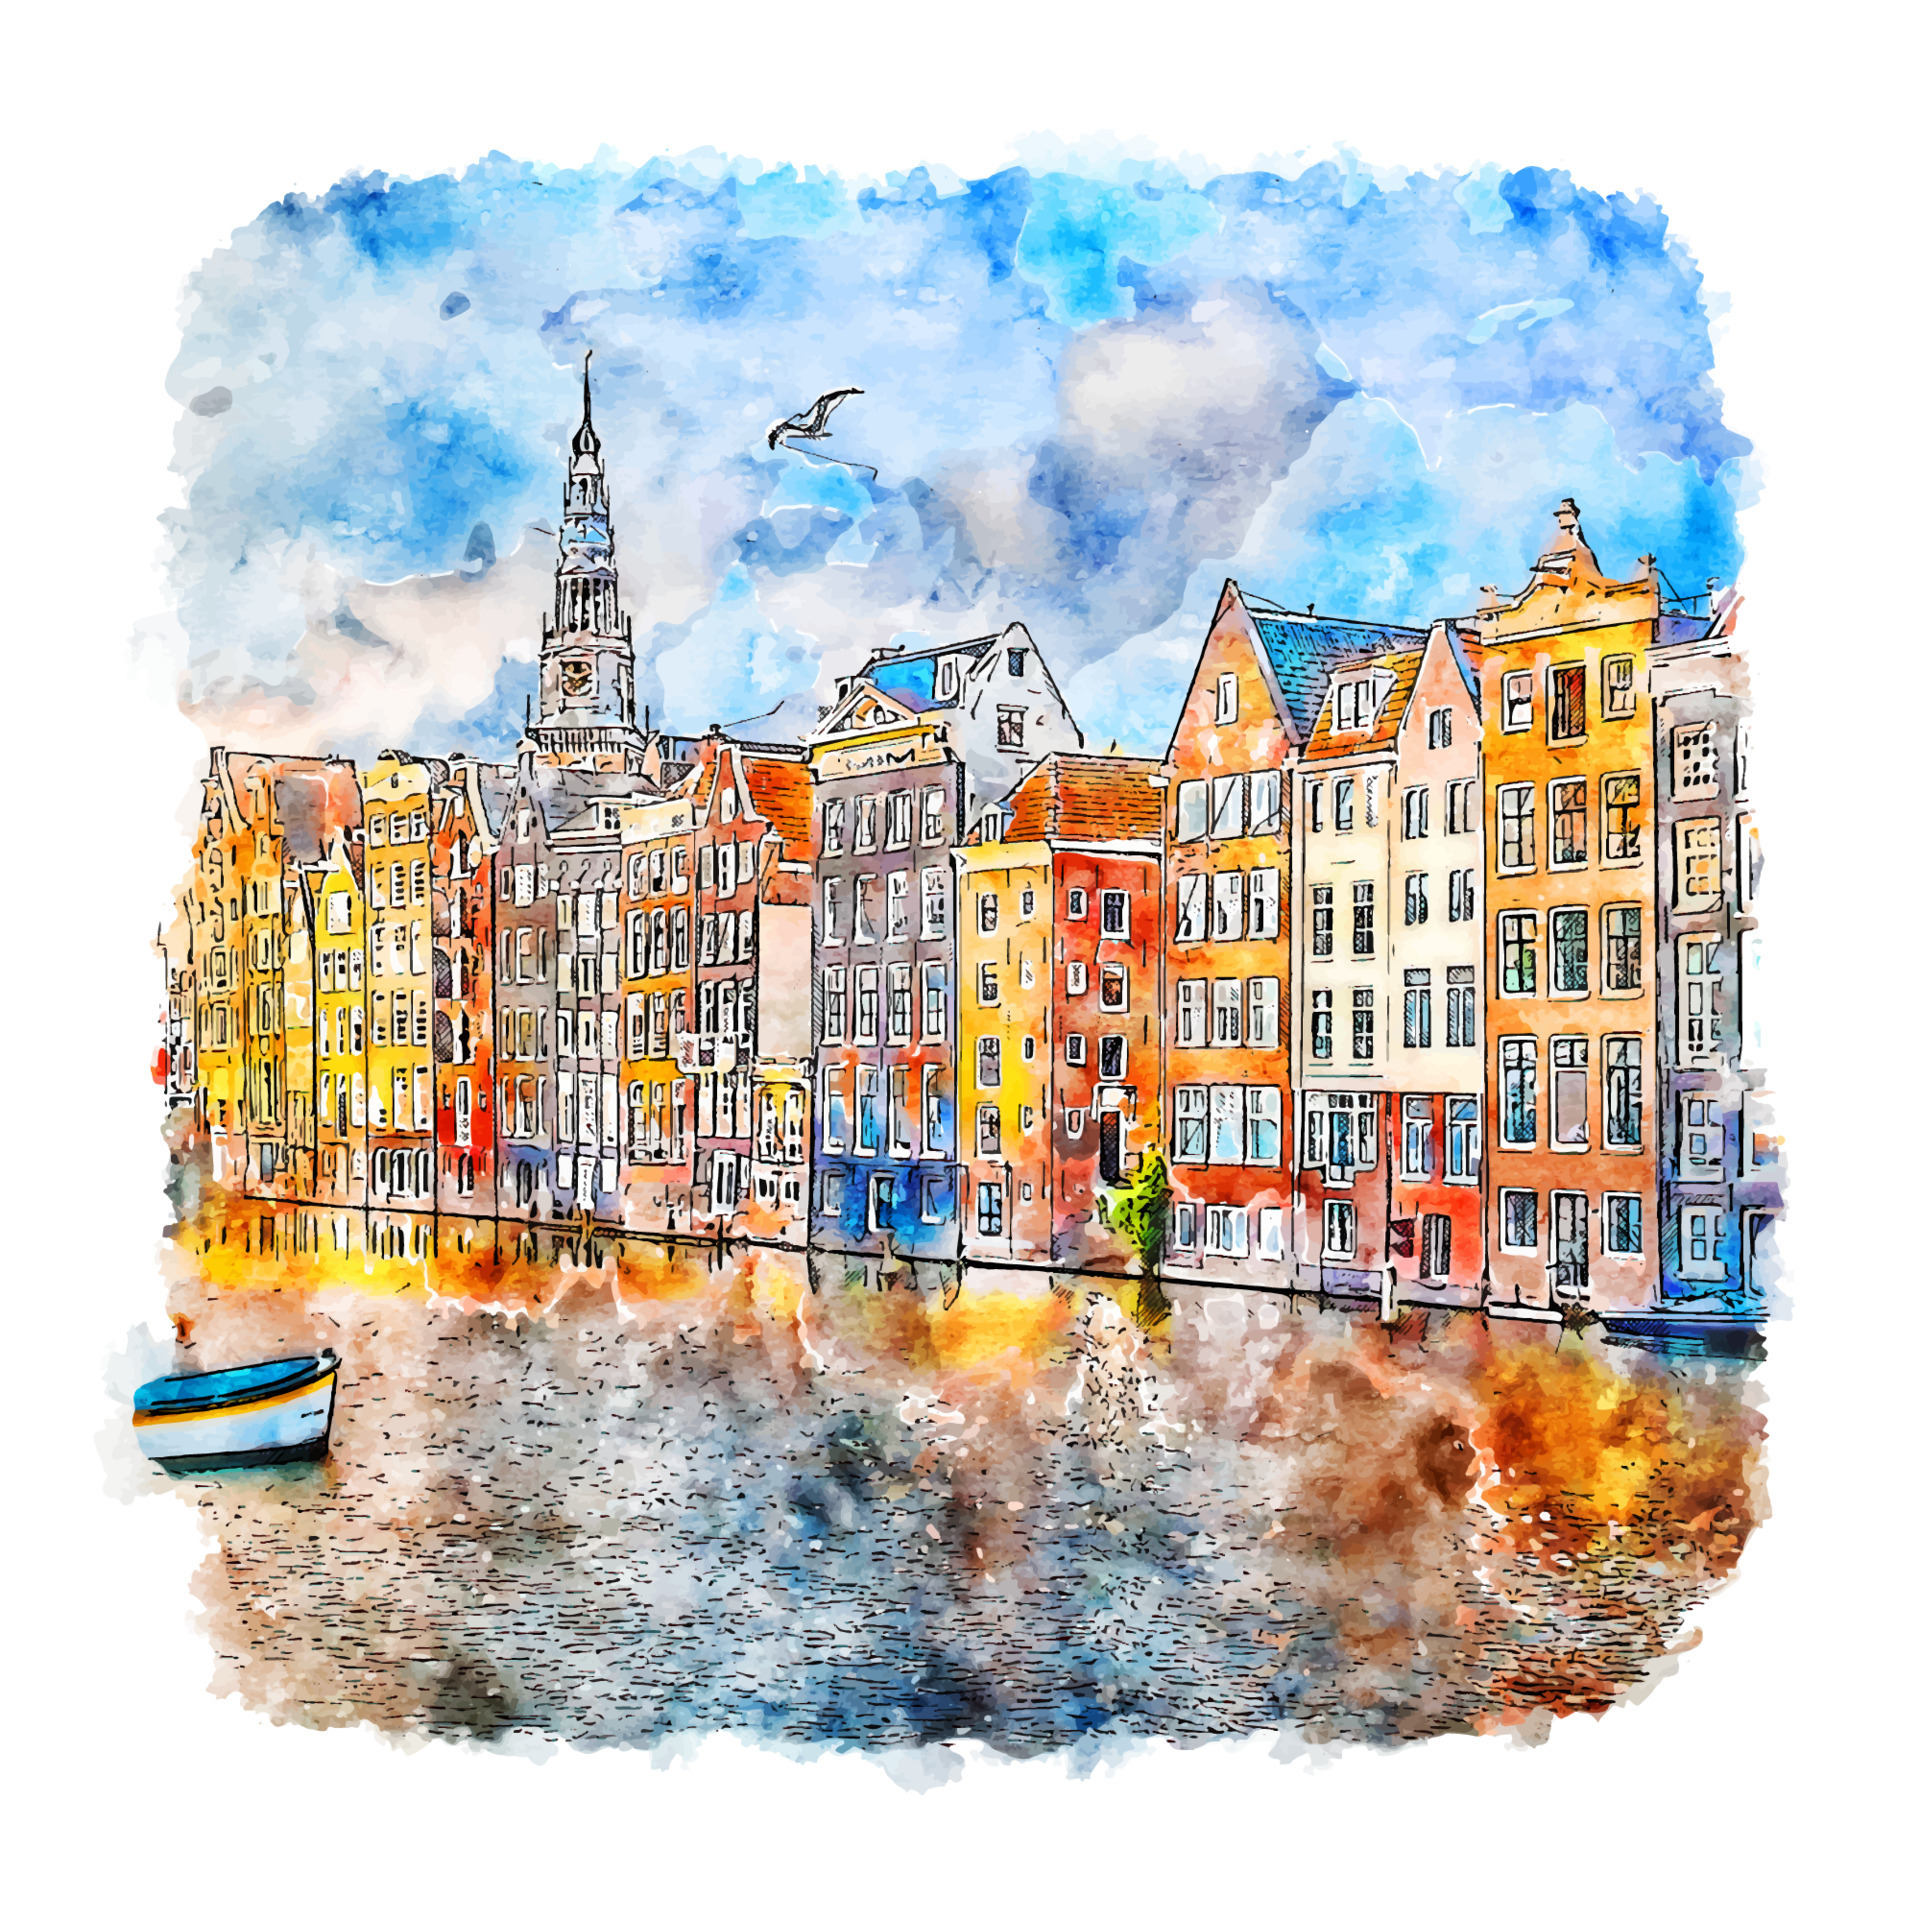 Amsterdam original ink and watercolor urban sketch painting. Amsterdam  watercolor paintings. European cities watercolor fine art images.